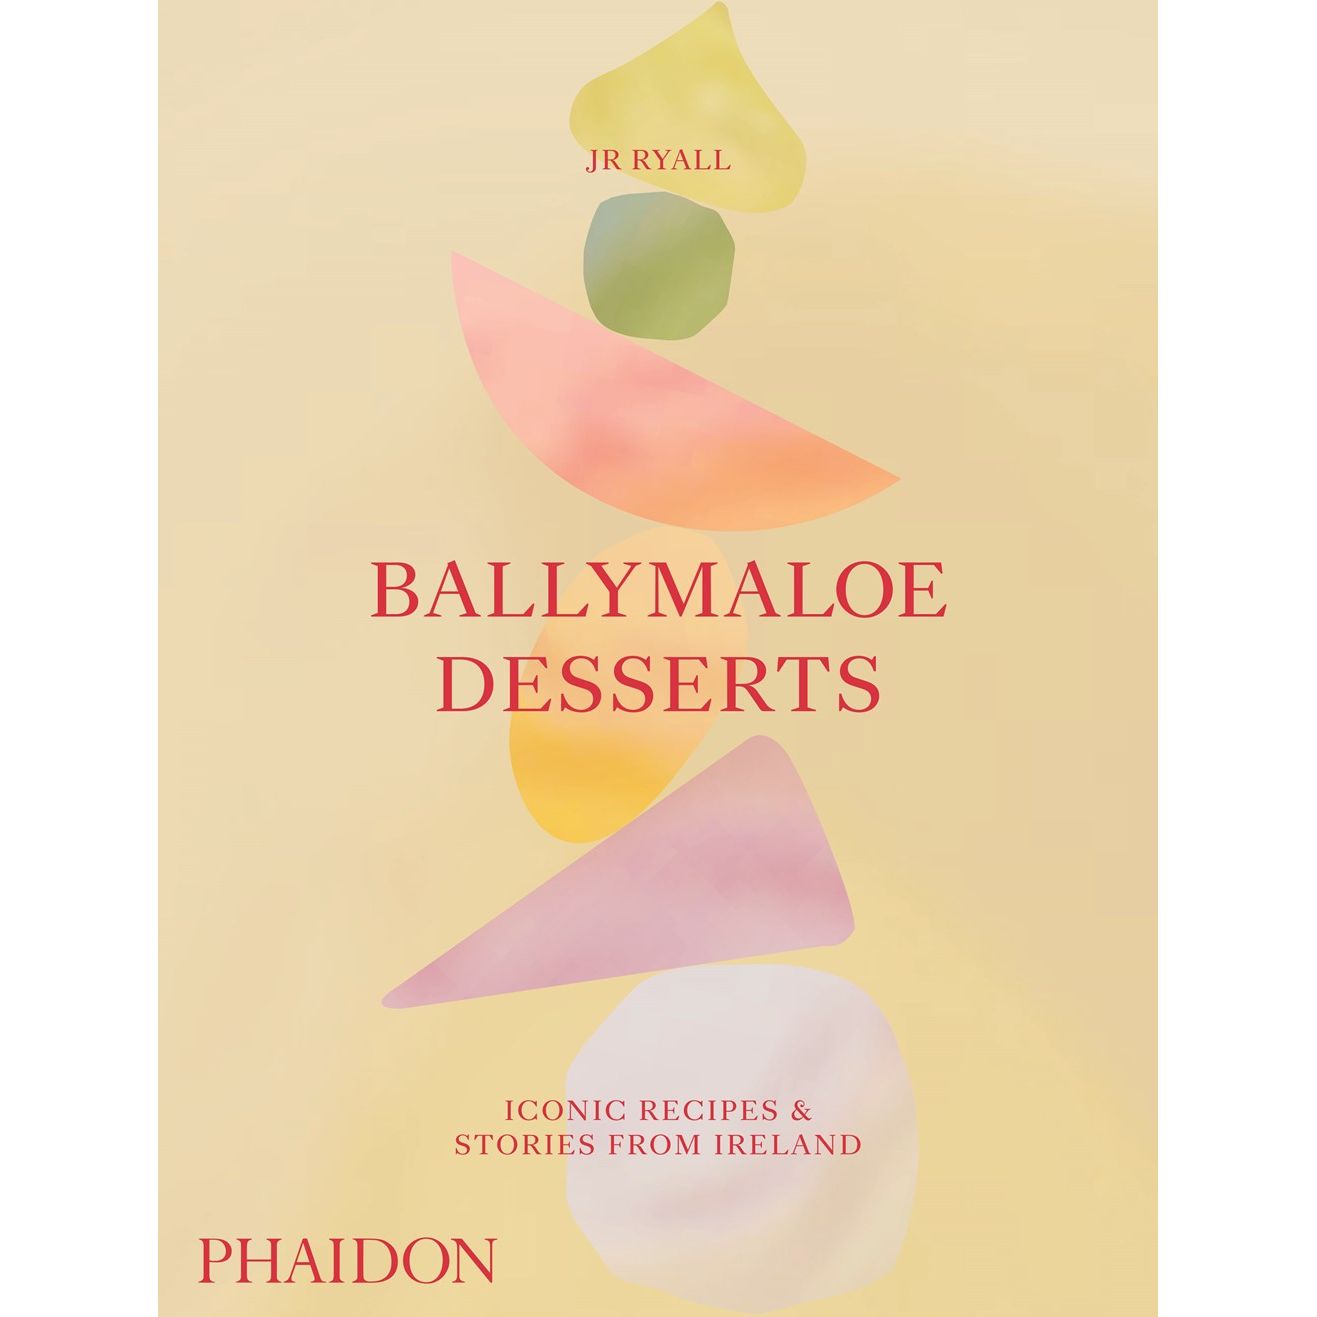 Ballymaloe Desserts (JR Ryall)